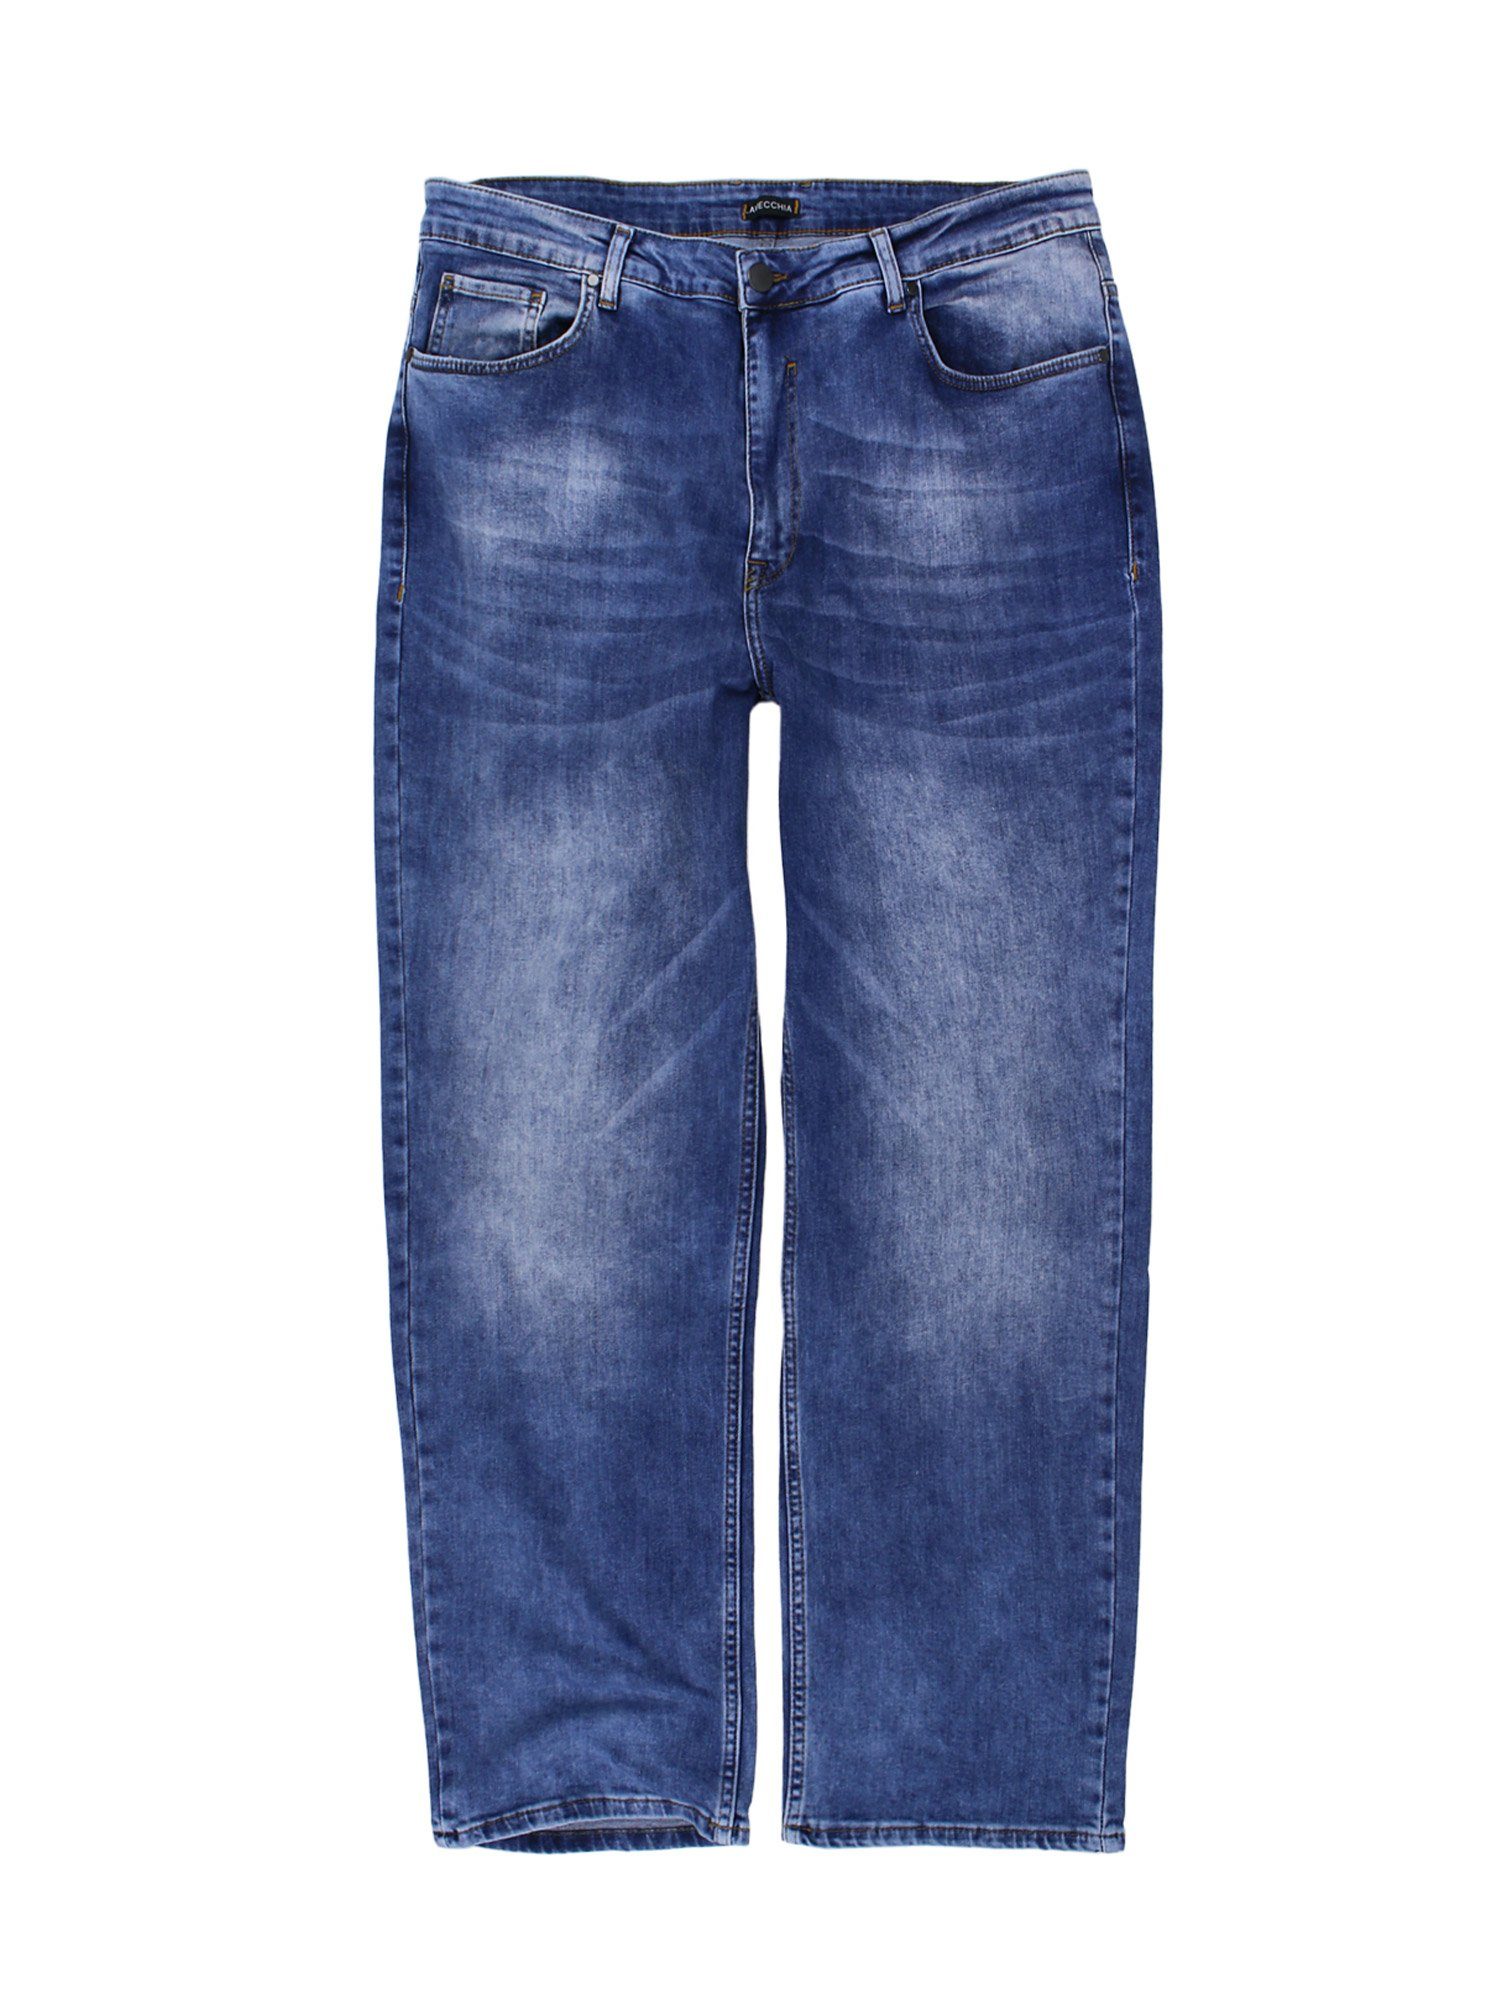 Lavecchia Comfort-fit-Jeans Übergrößen Herren Jeanshose LV-501 Stretch mit Elasthan stoneblau